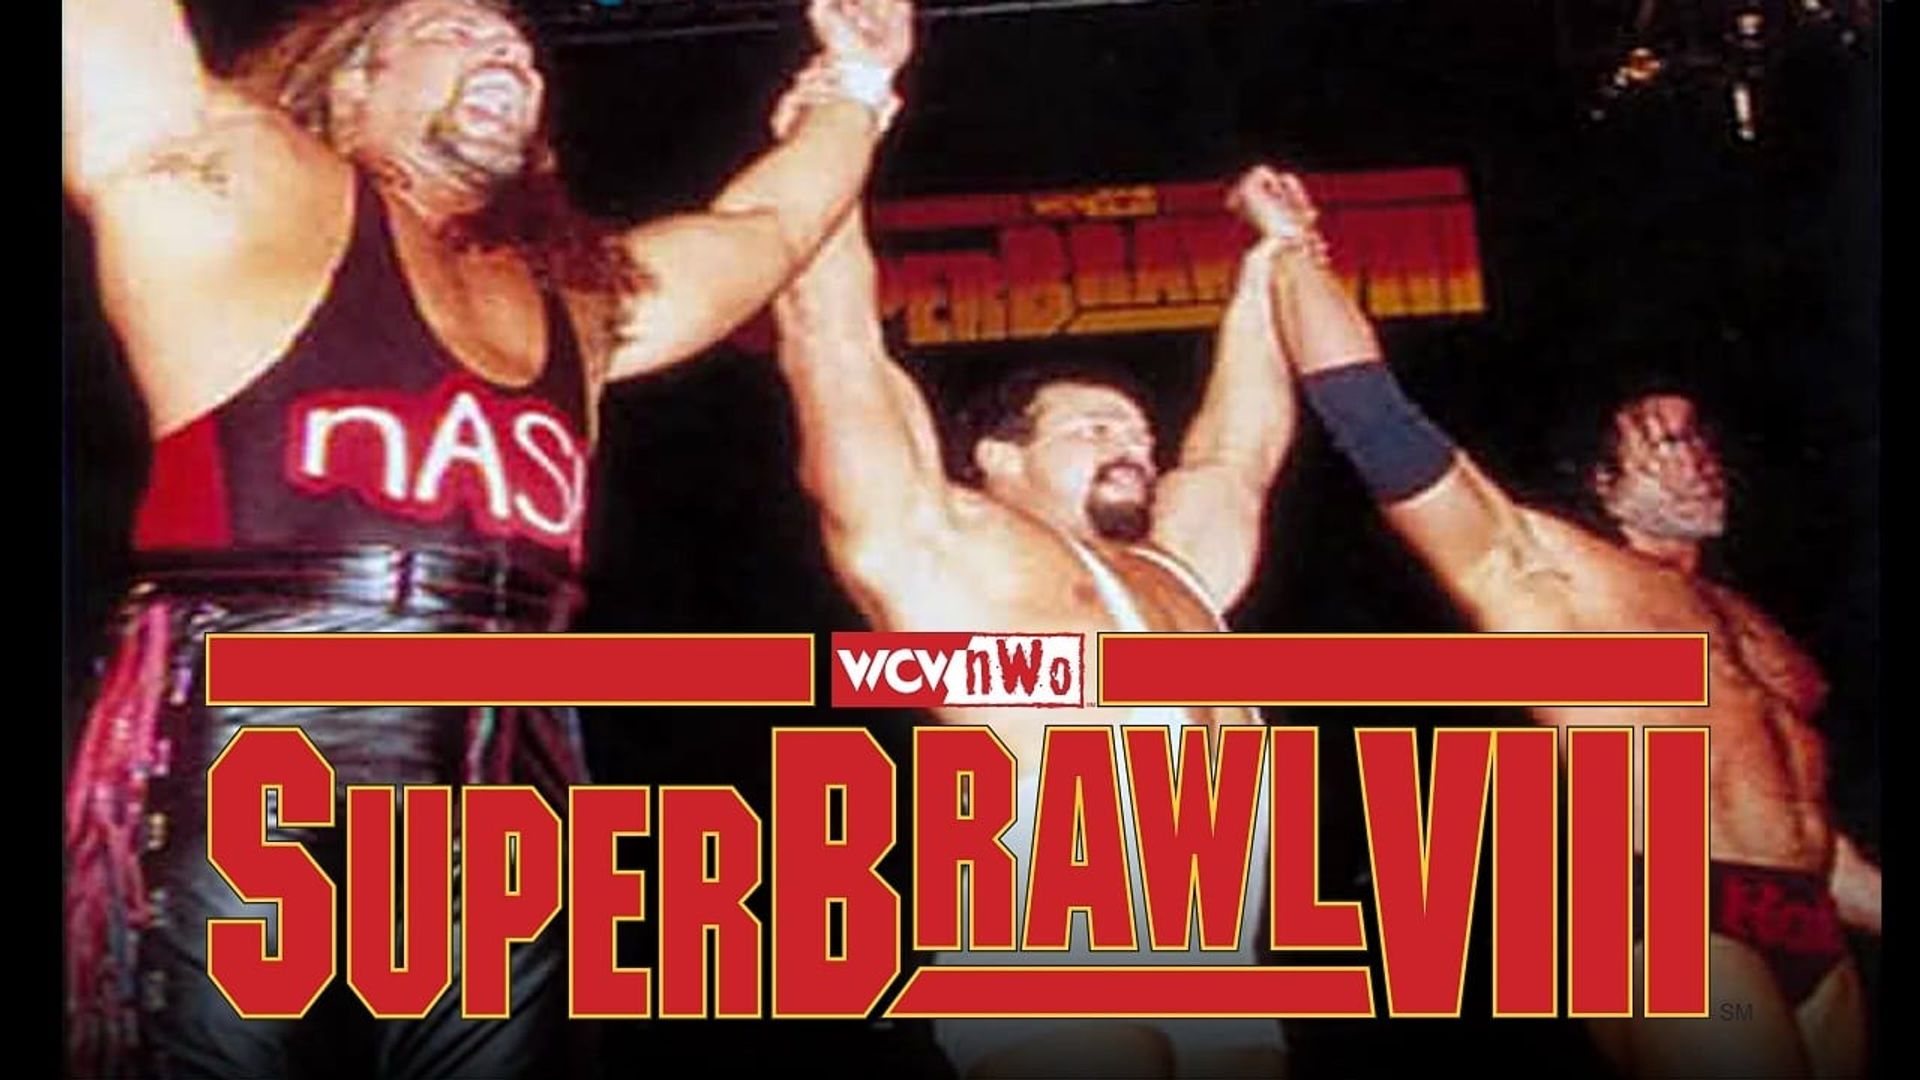 WCW/NWO SuperBrawl VIII background